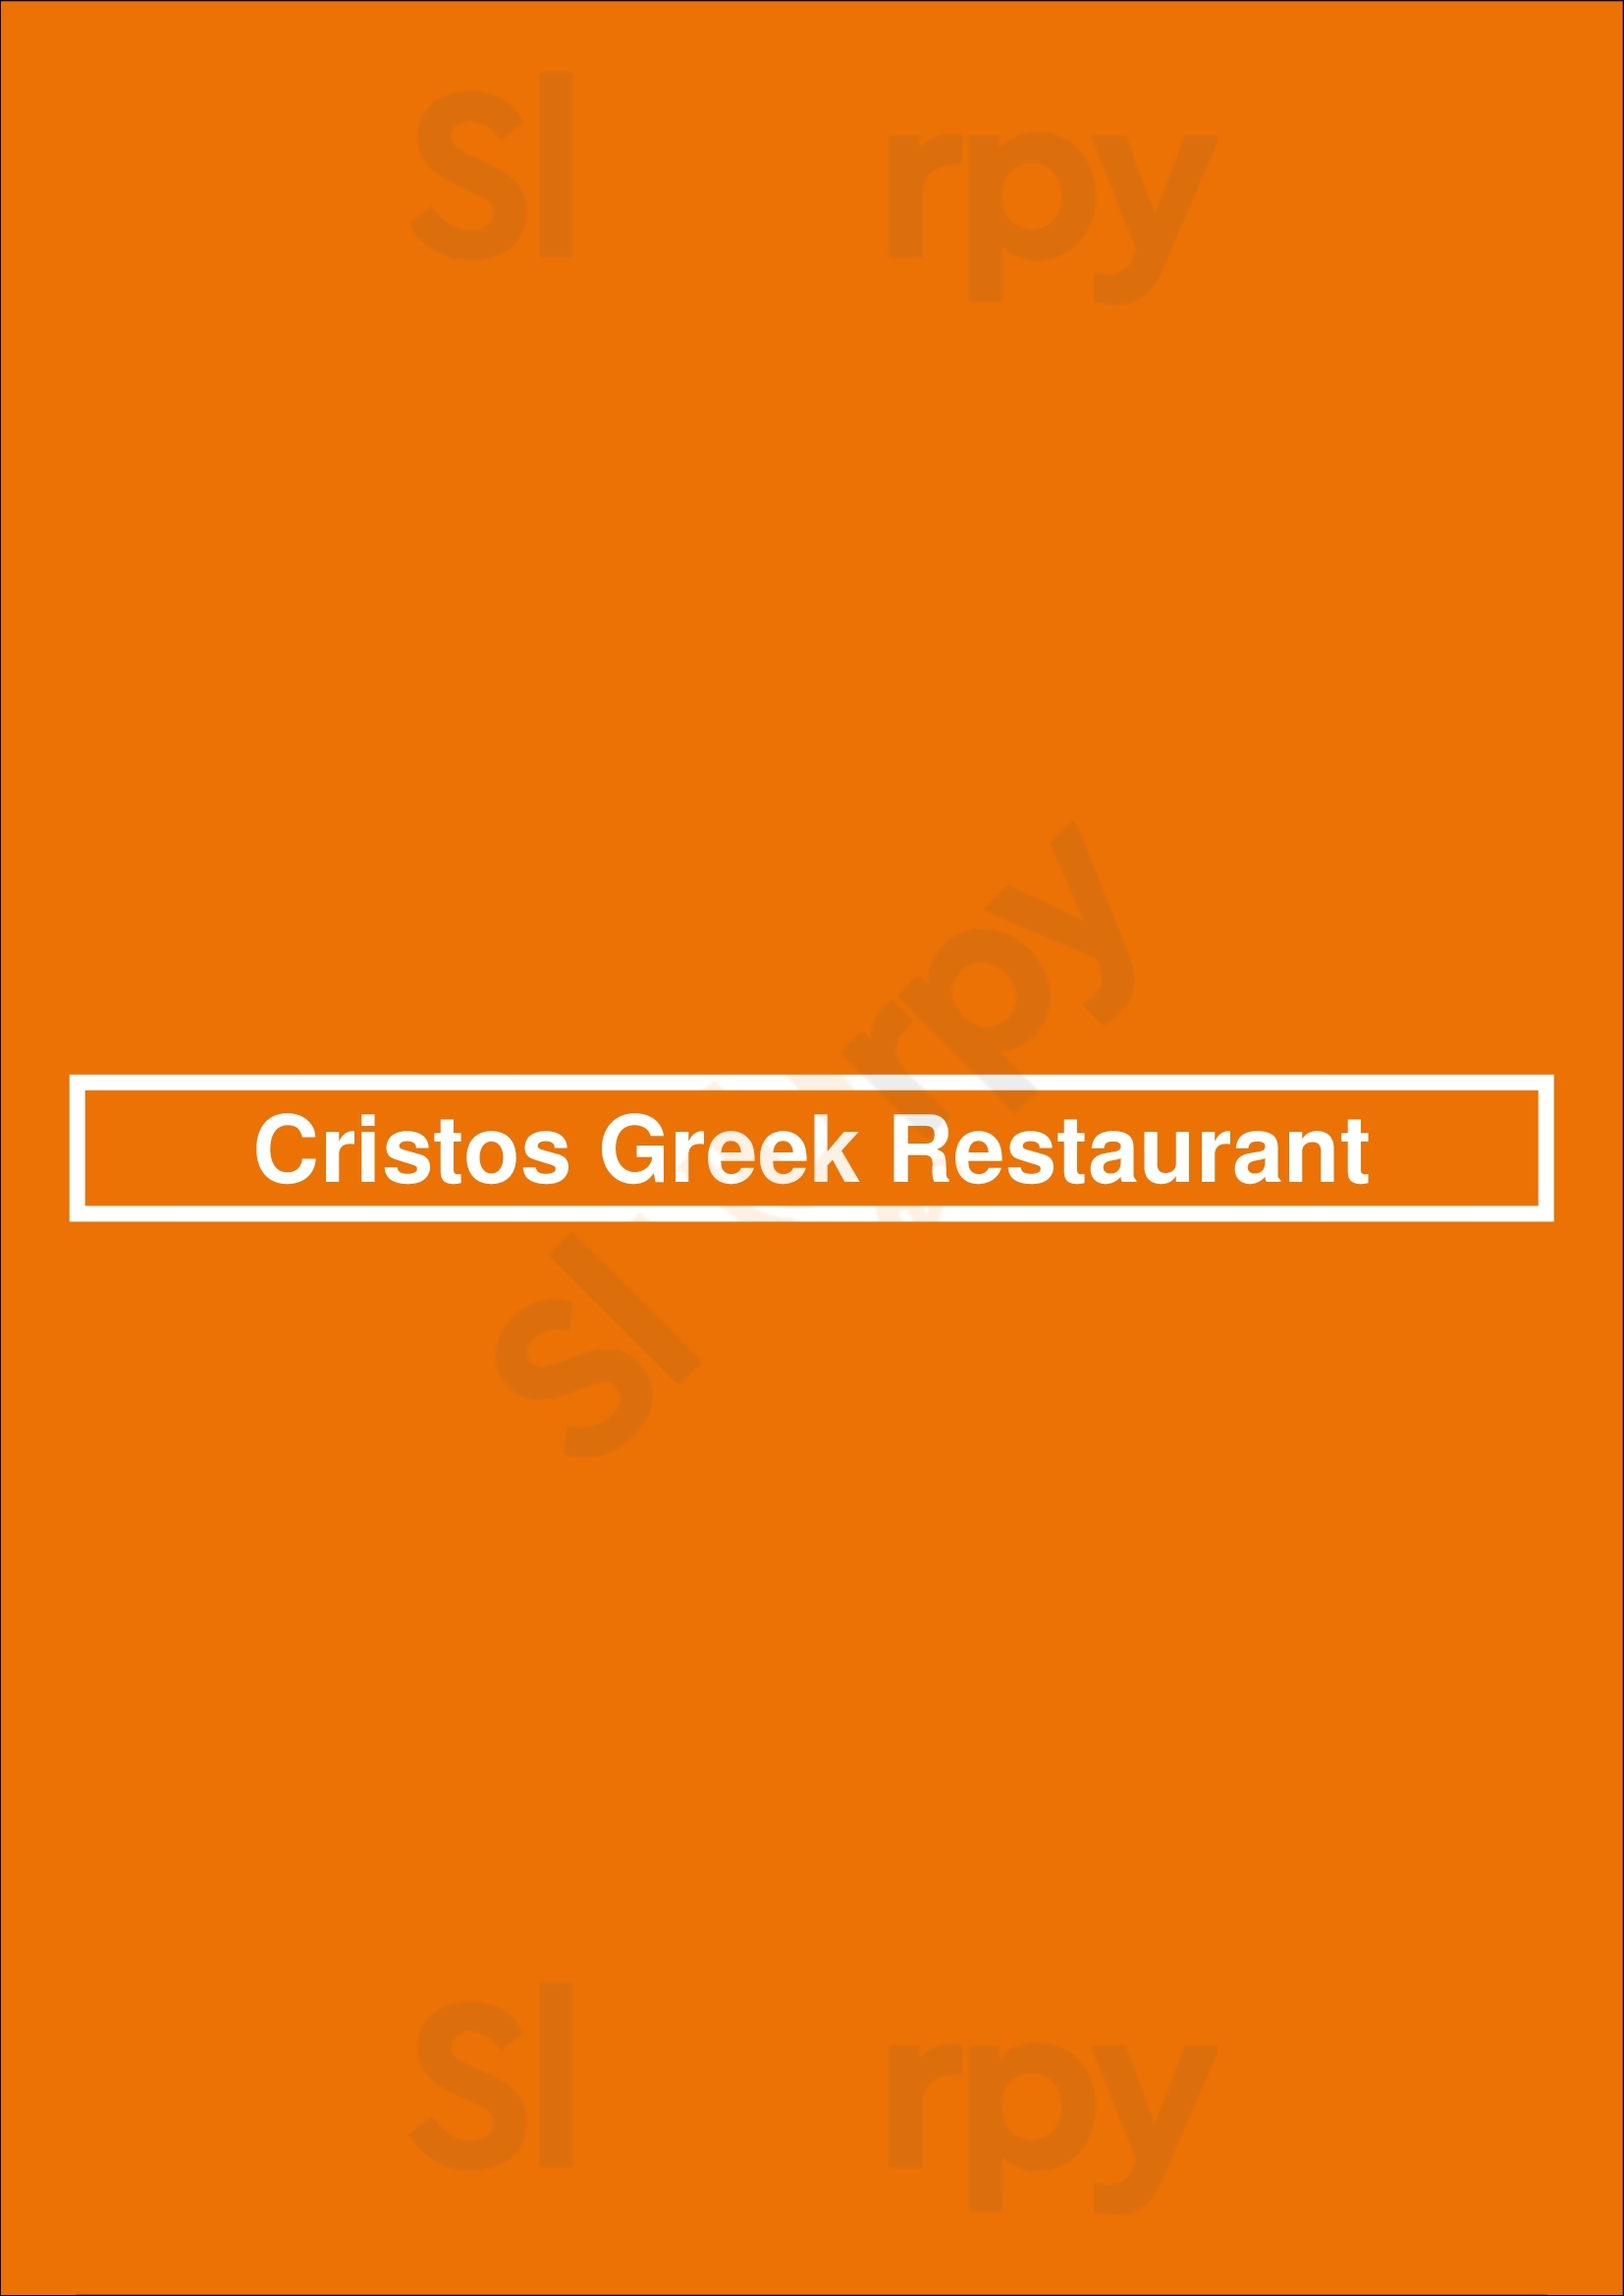 Cristos Greek Restaurant Burnaby Menu - 1